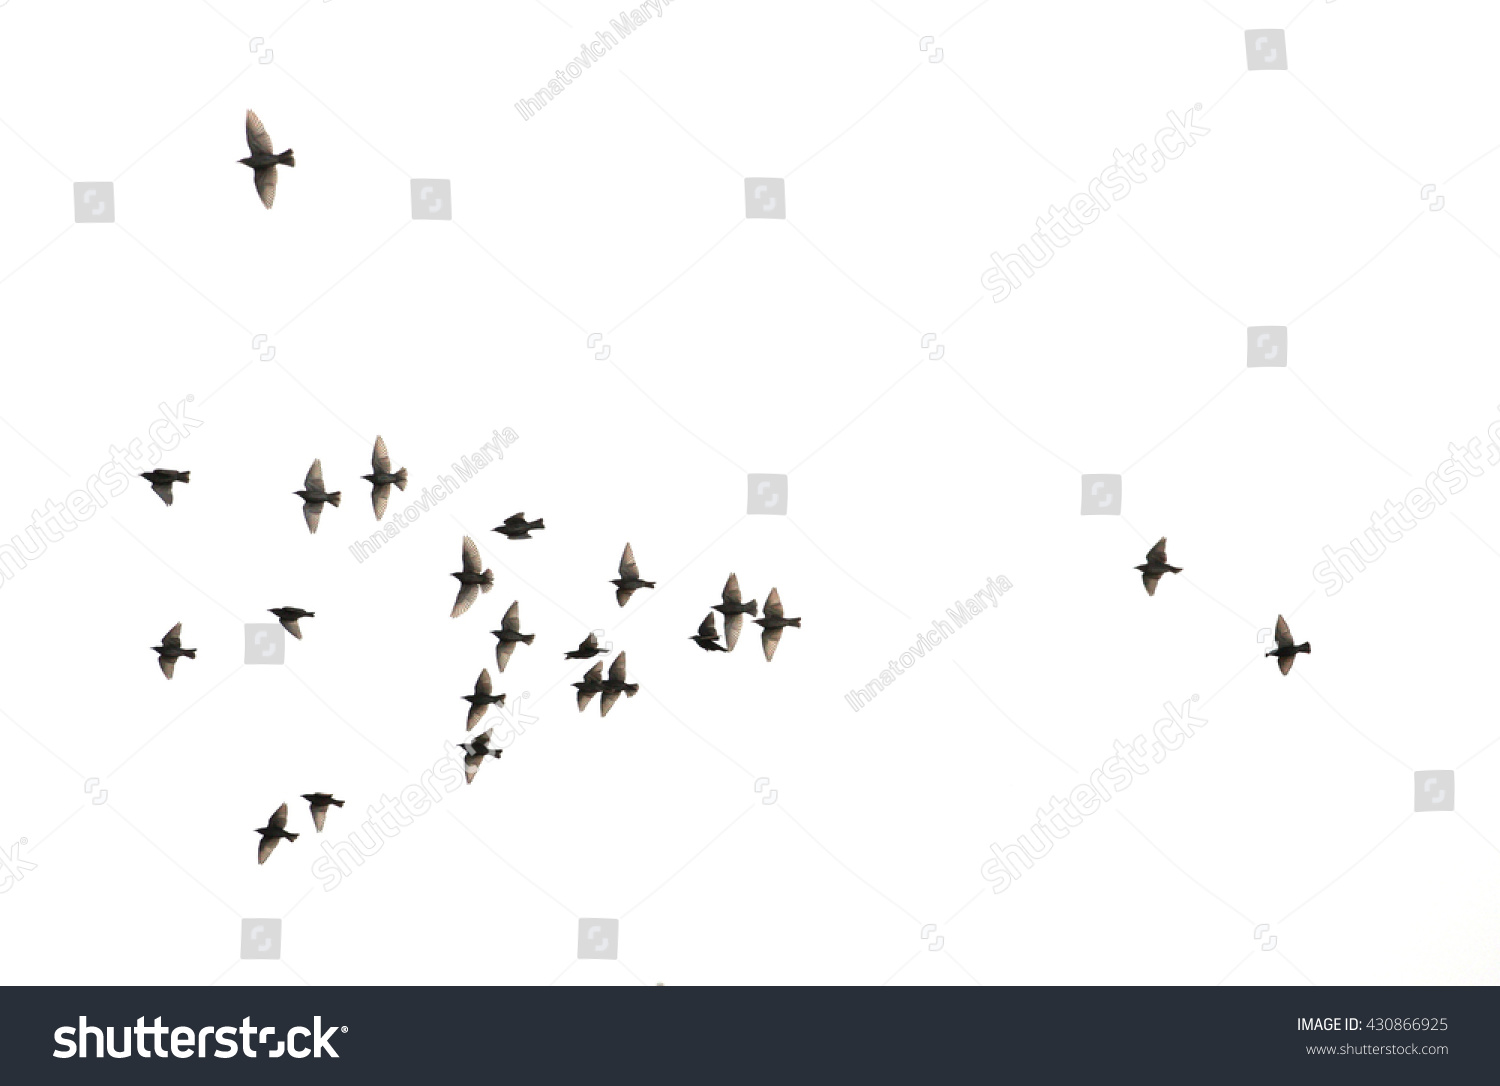 a flock of flying birds.  #430866925